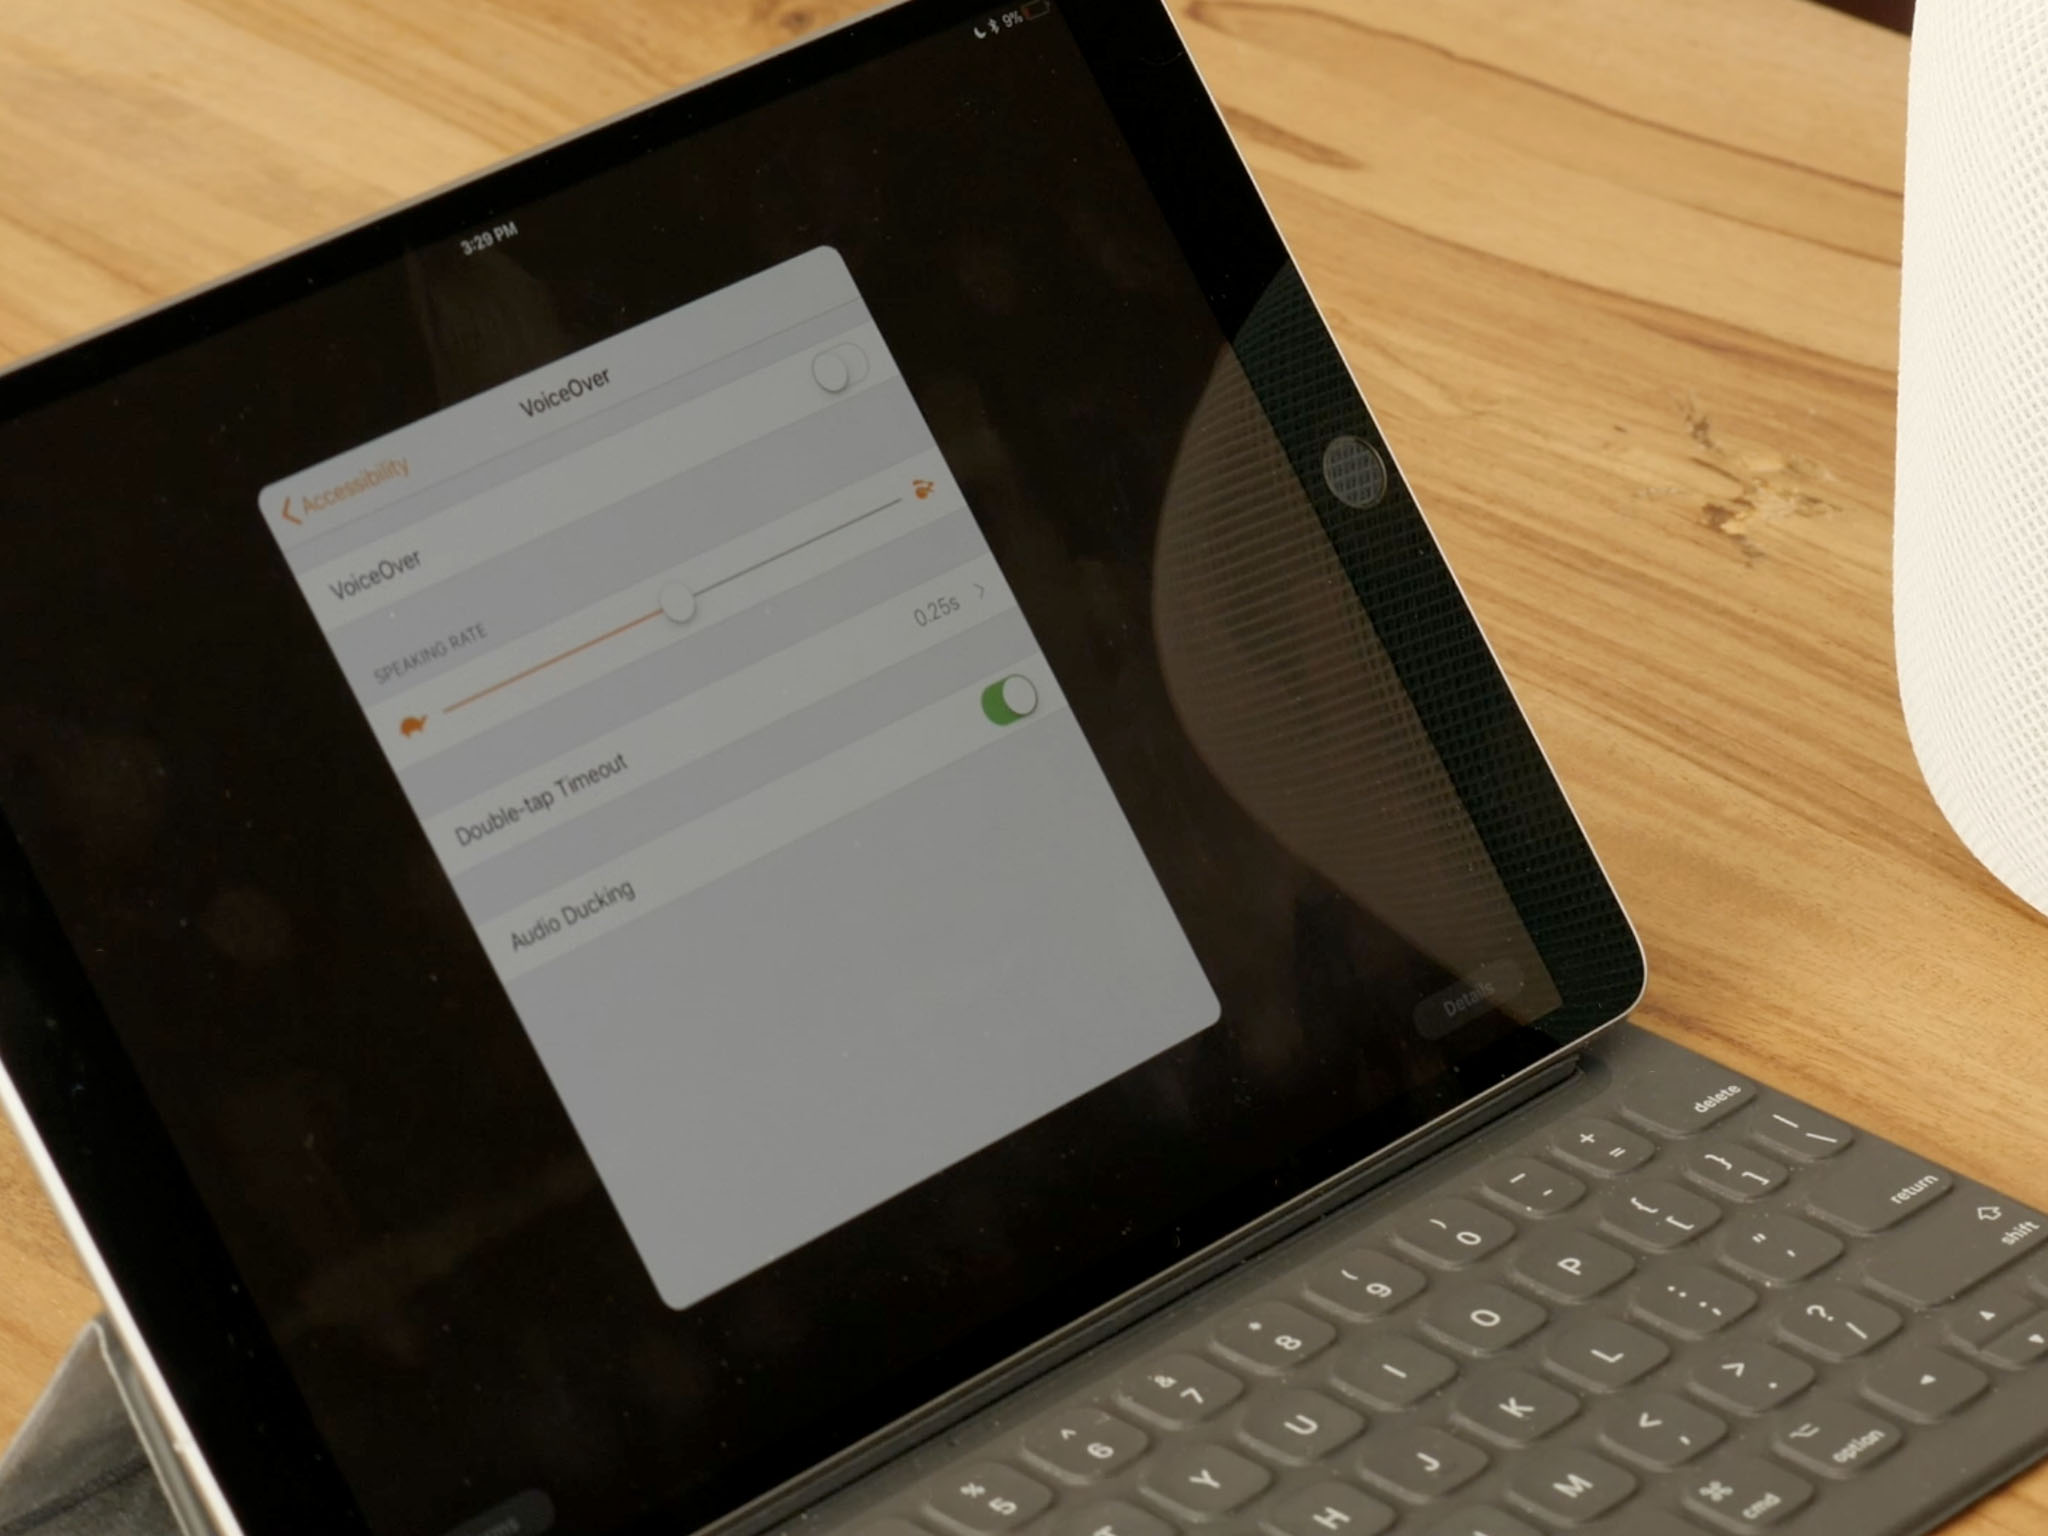 HomePod accessibility settings on an iPad